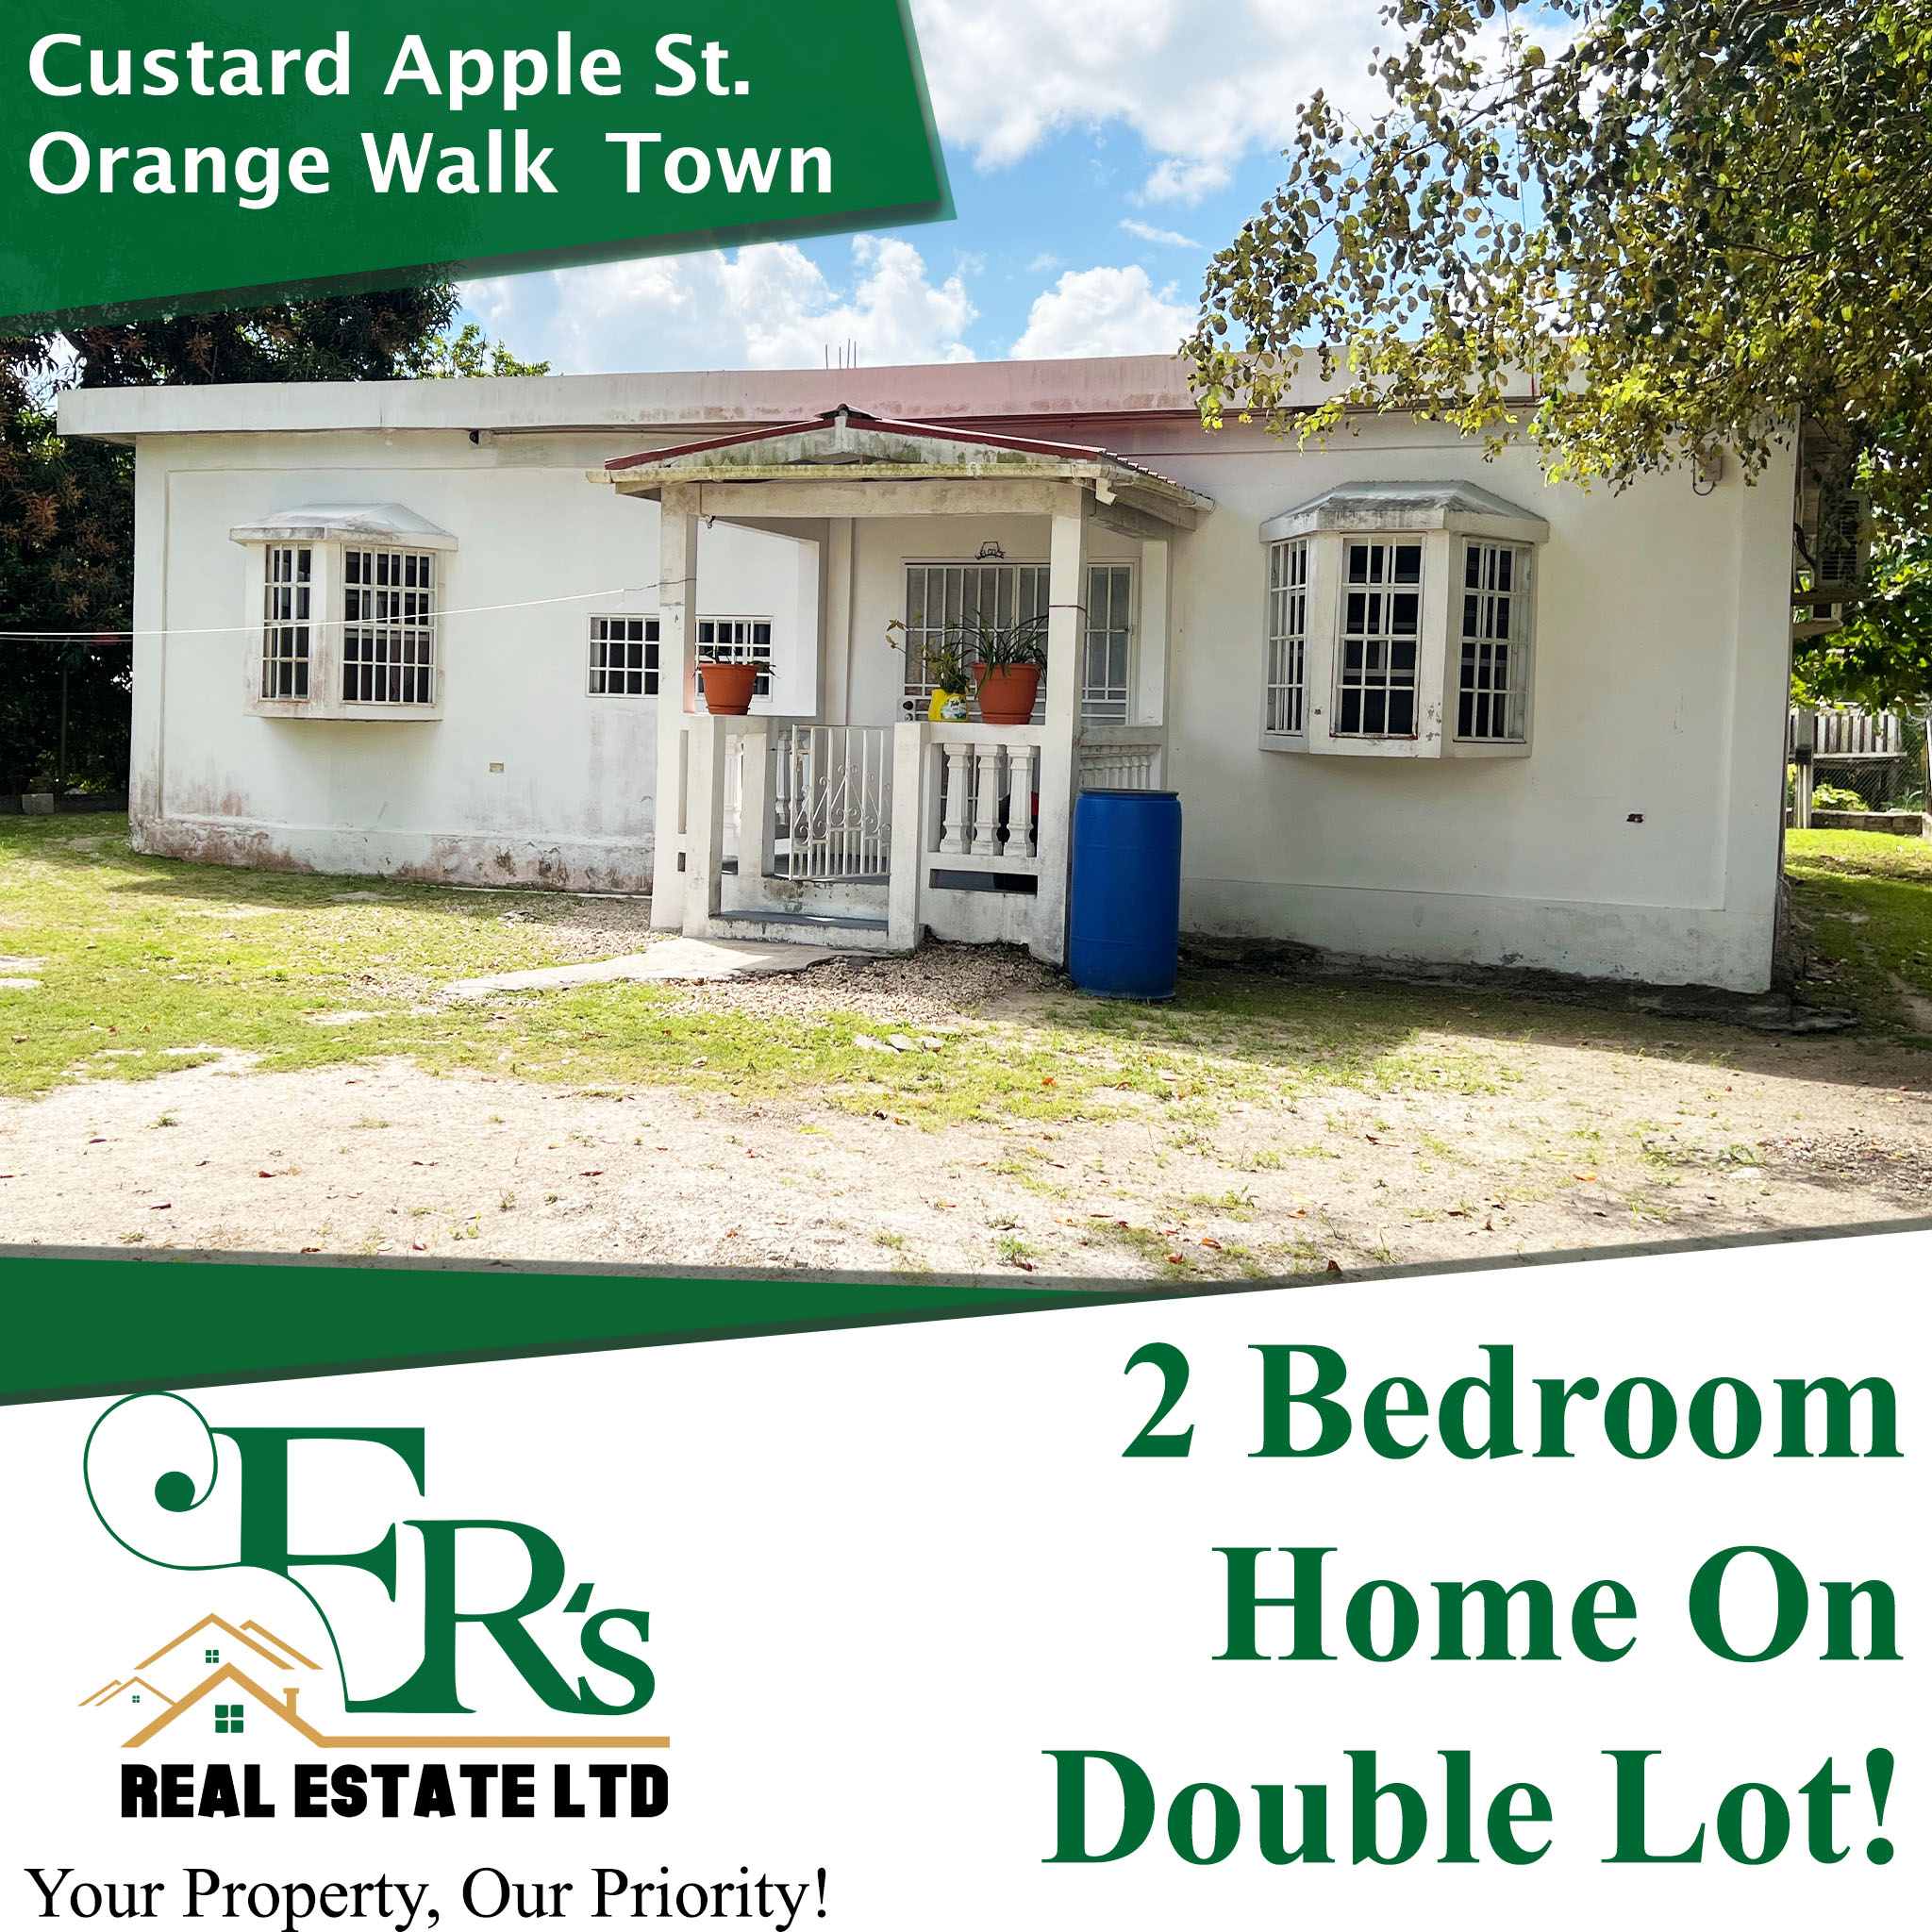 2 Bedroom Home on Double Lot, Custard Apple St, Orange Walk Town, Belize